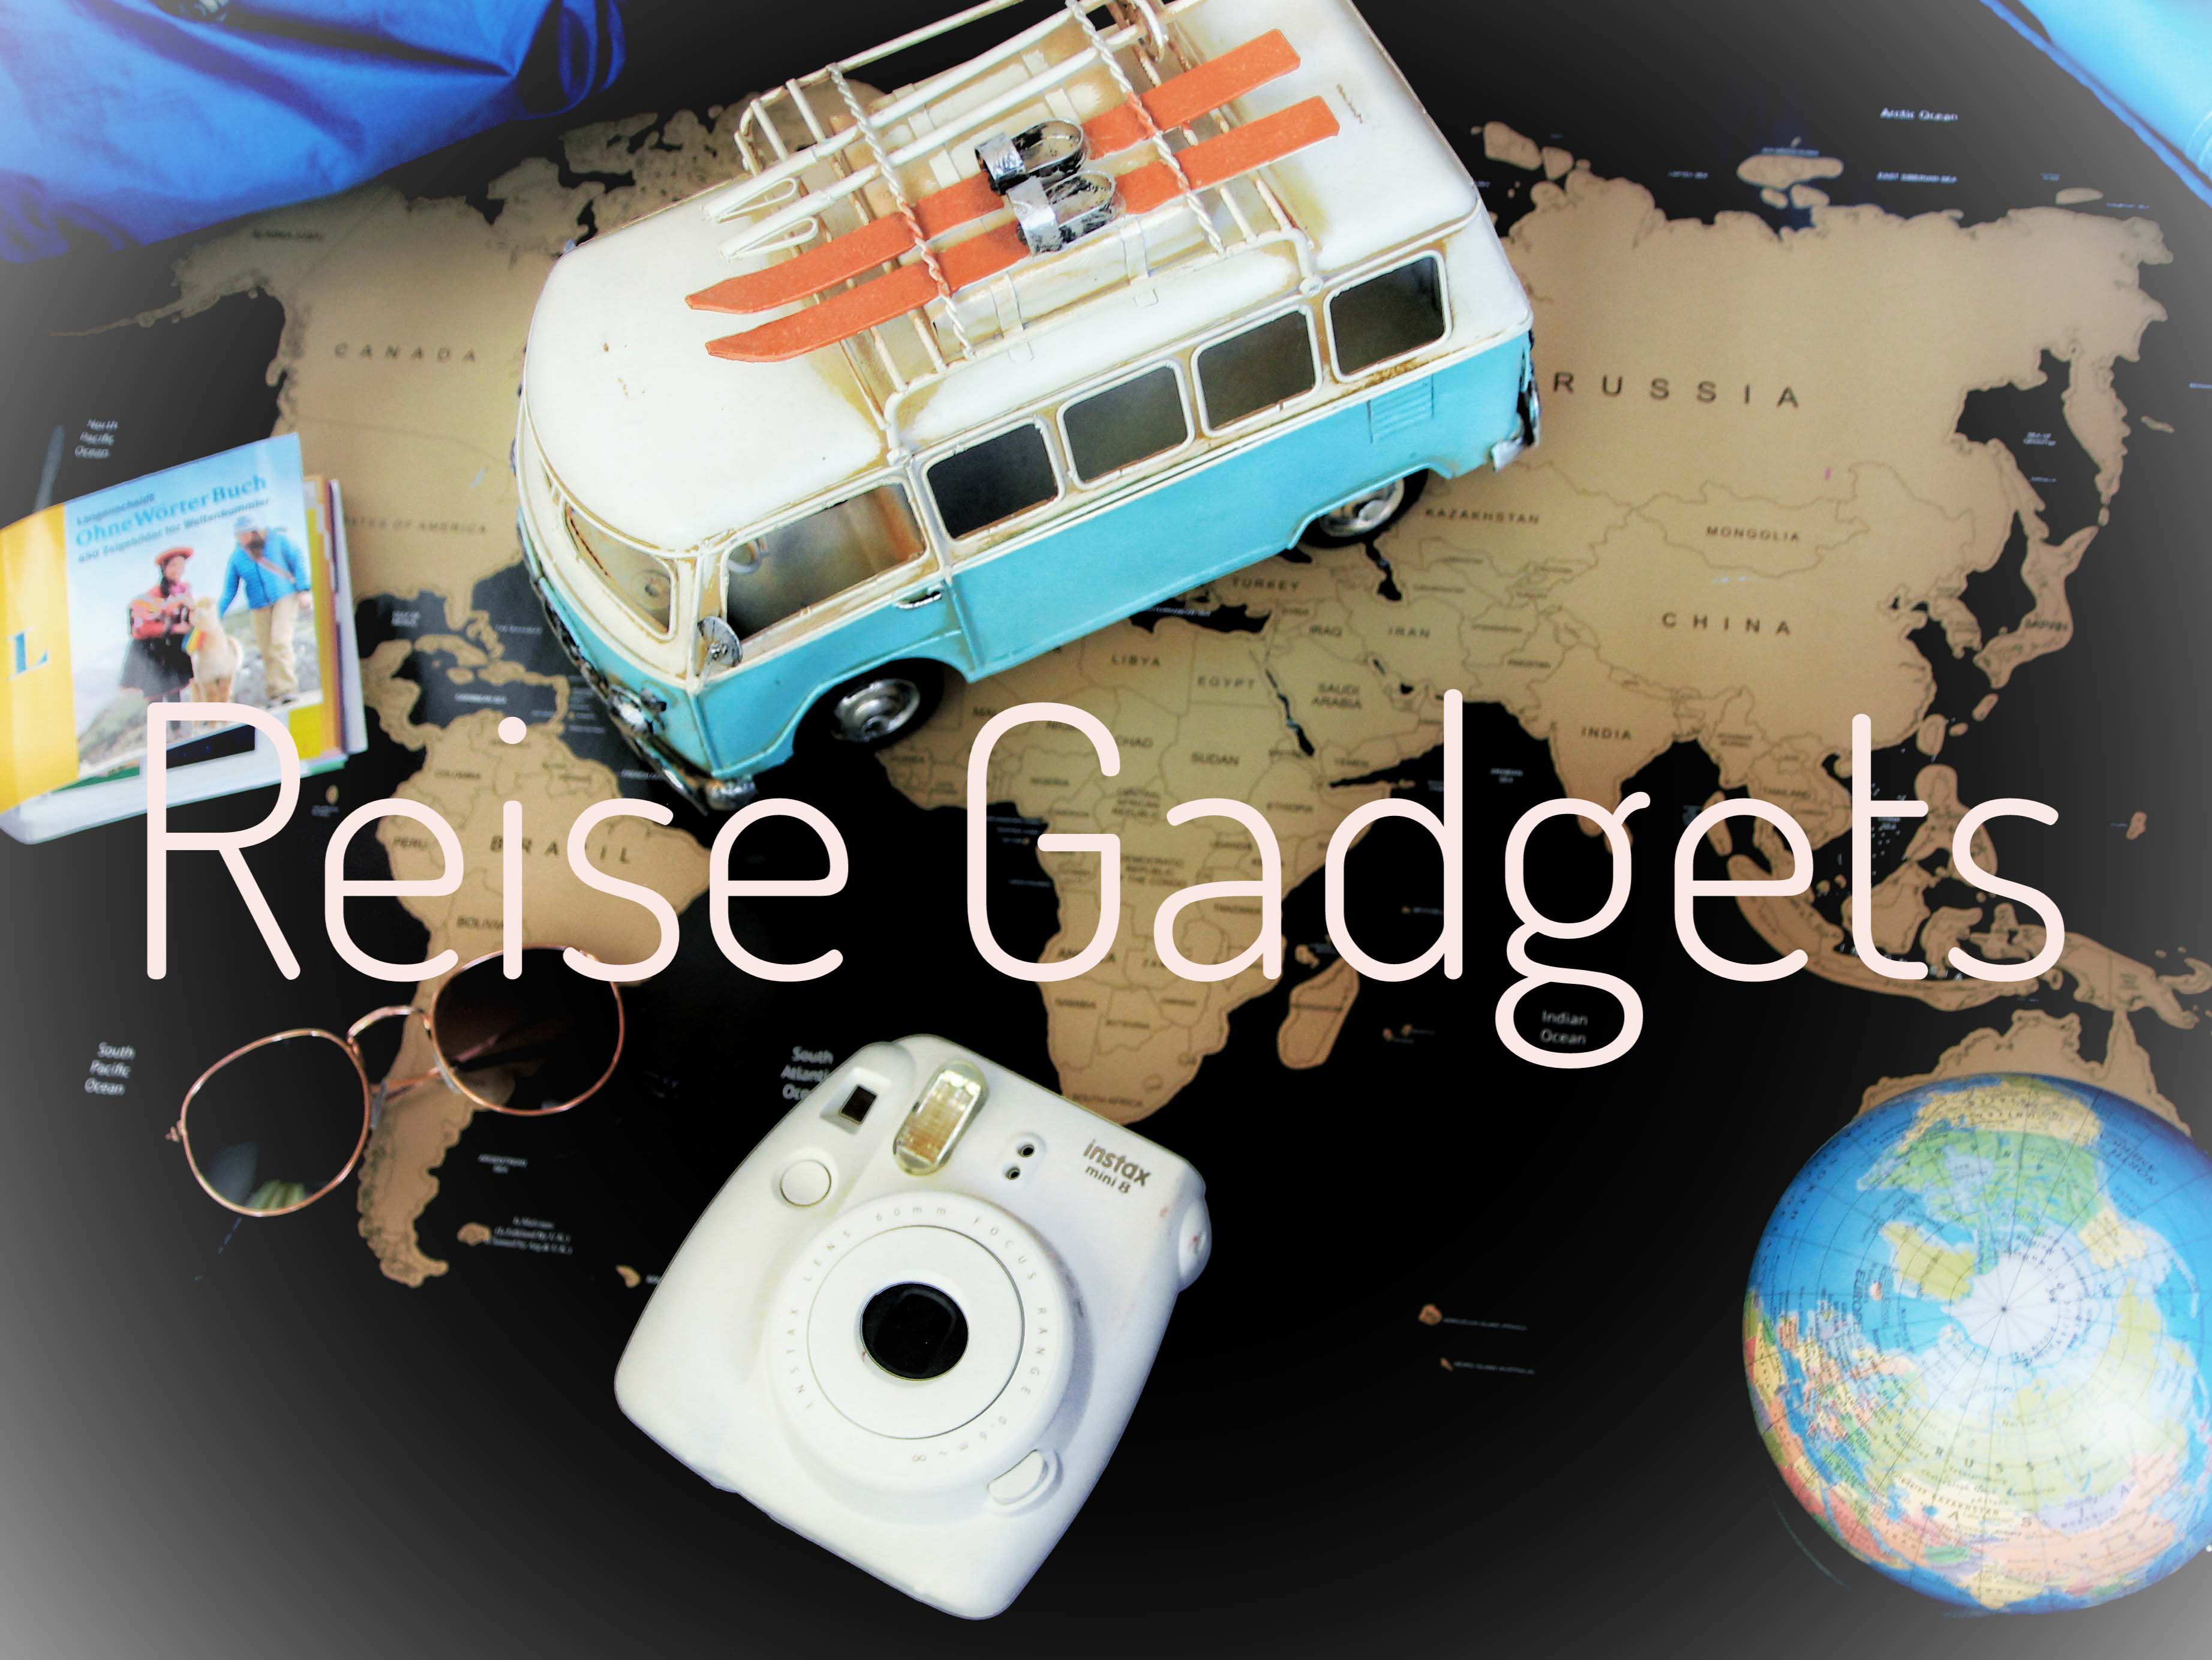 https://www.placesofjuma.com/de/reise-gadgets/reise-gadgets-3/